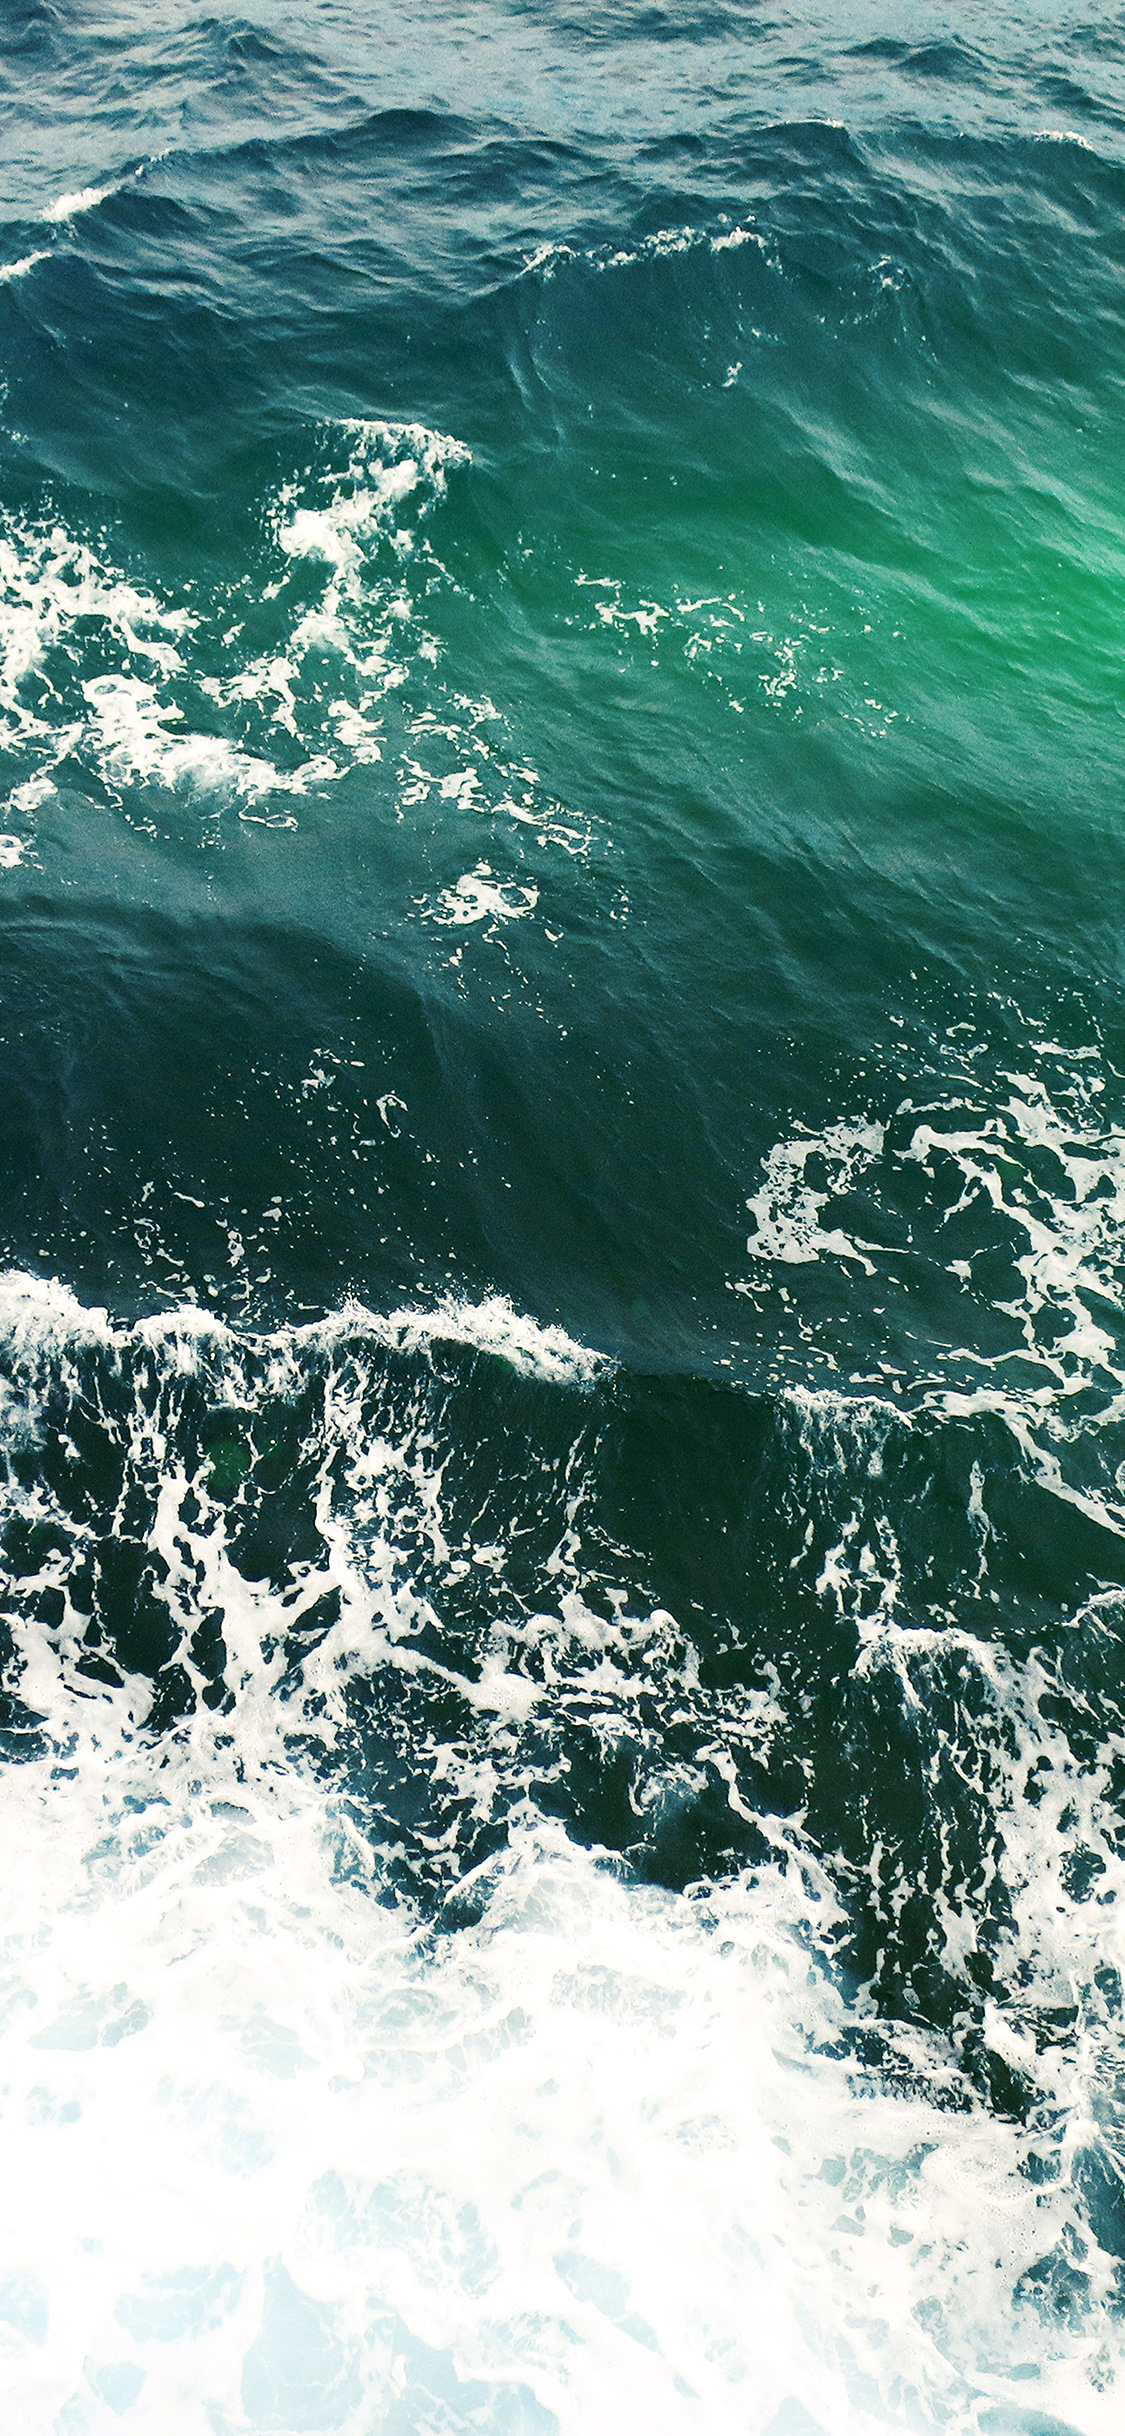 iPhone X wallpaper. water sea vacation texture ocean beach green